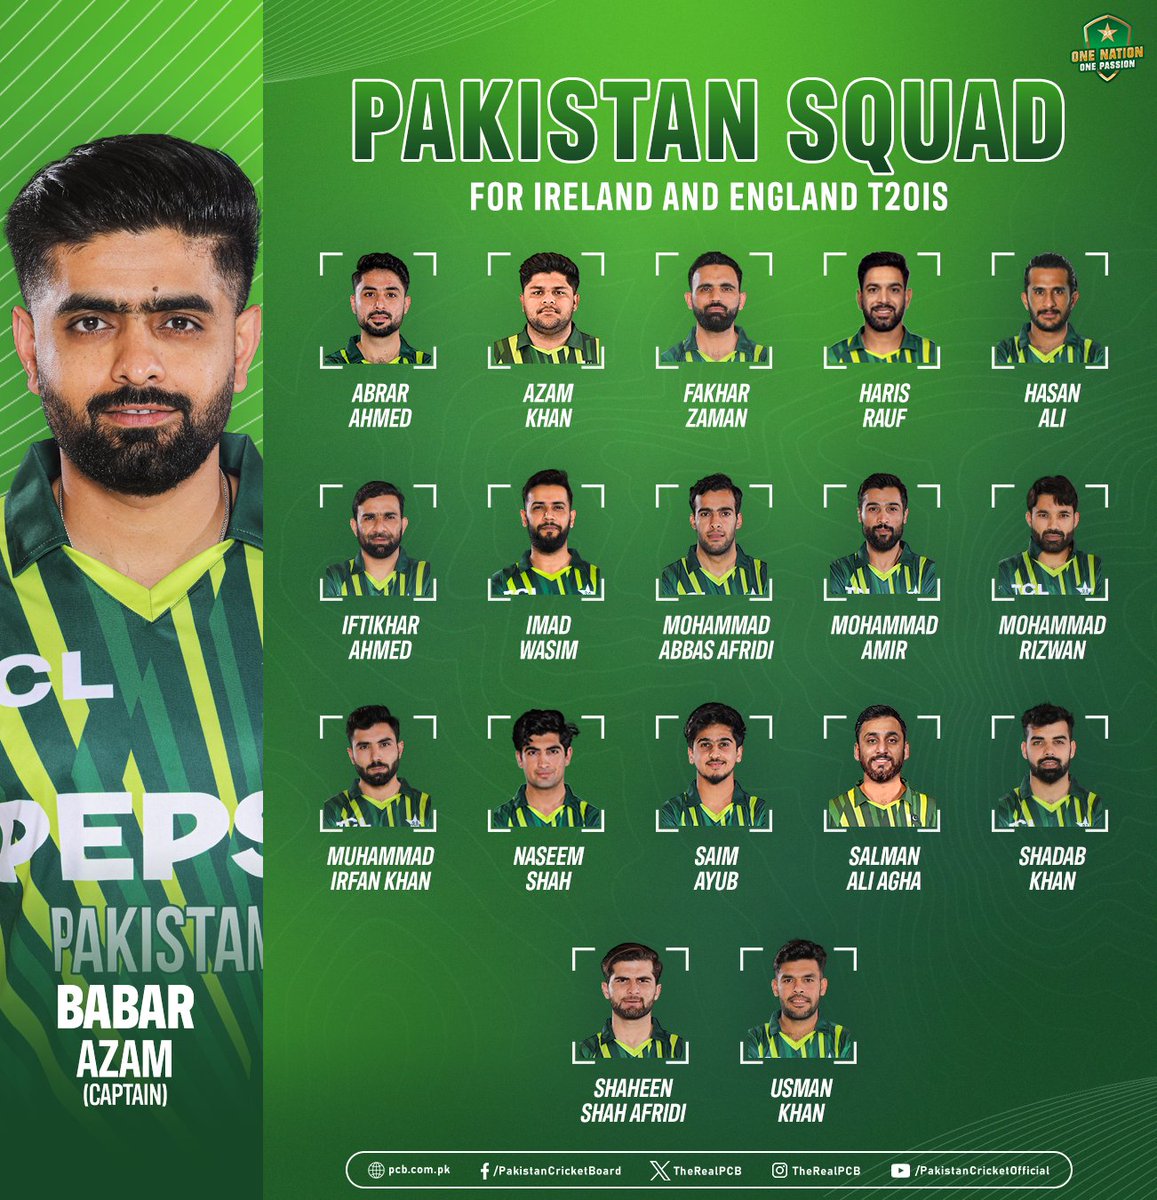 Pakistan's squad  for England and Ireland series 💚
#PAKvsIRE      #PAKvENG